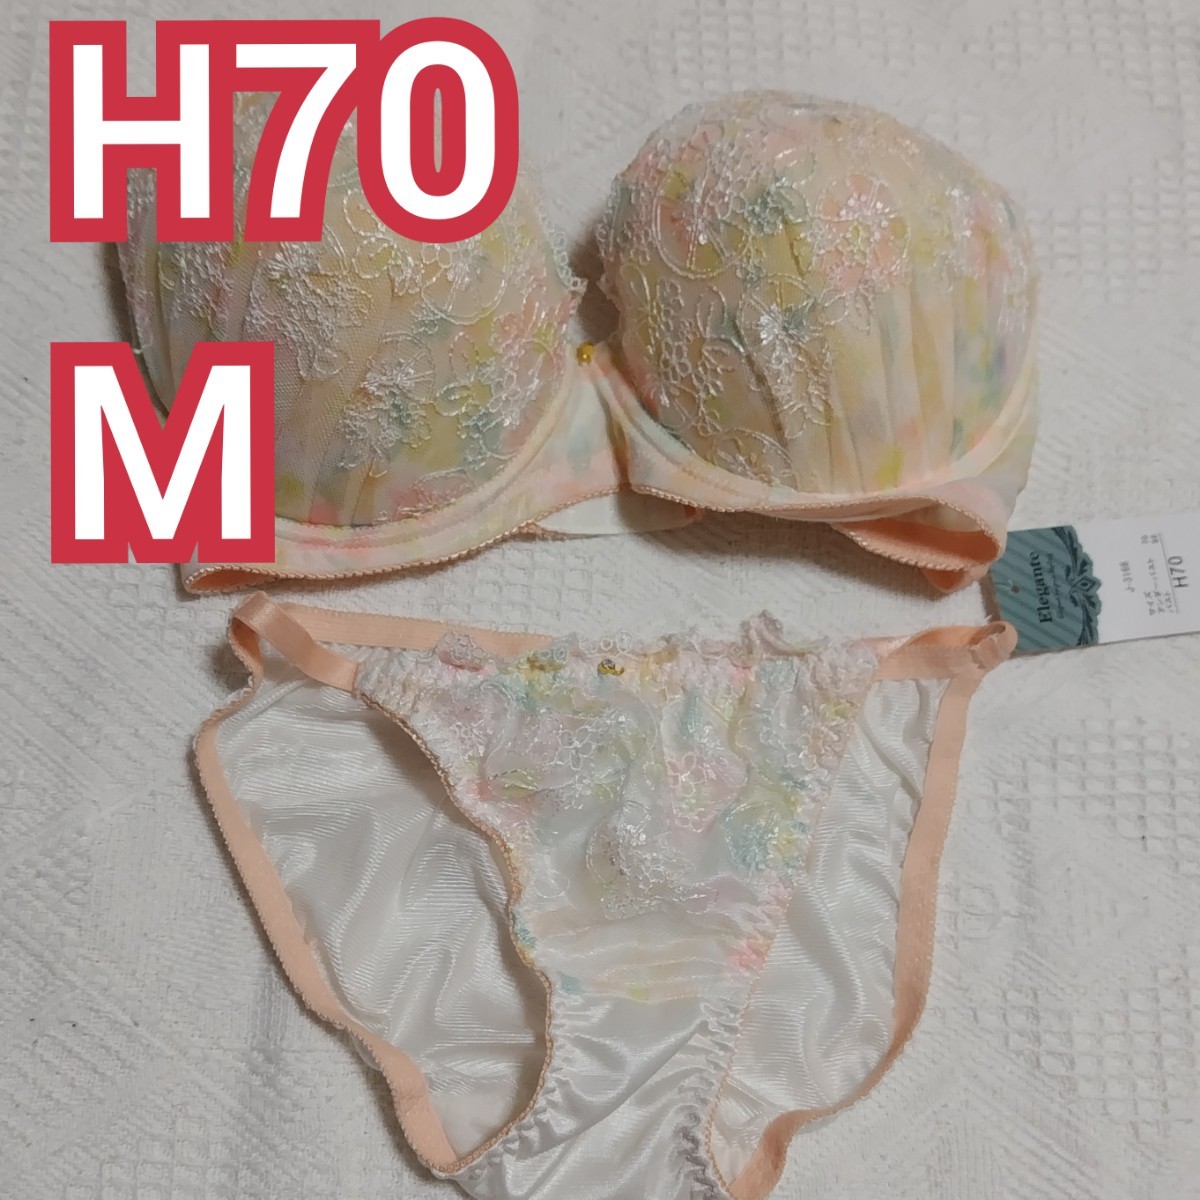 【H70 M】 ブラジャー ショーツ 上下セット かわいい サーモンピンク系 グラマー 花柄 下着 ブラショーツ(トリンプチュチュアンナ)の画像1